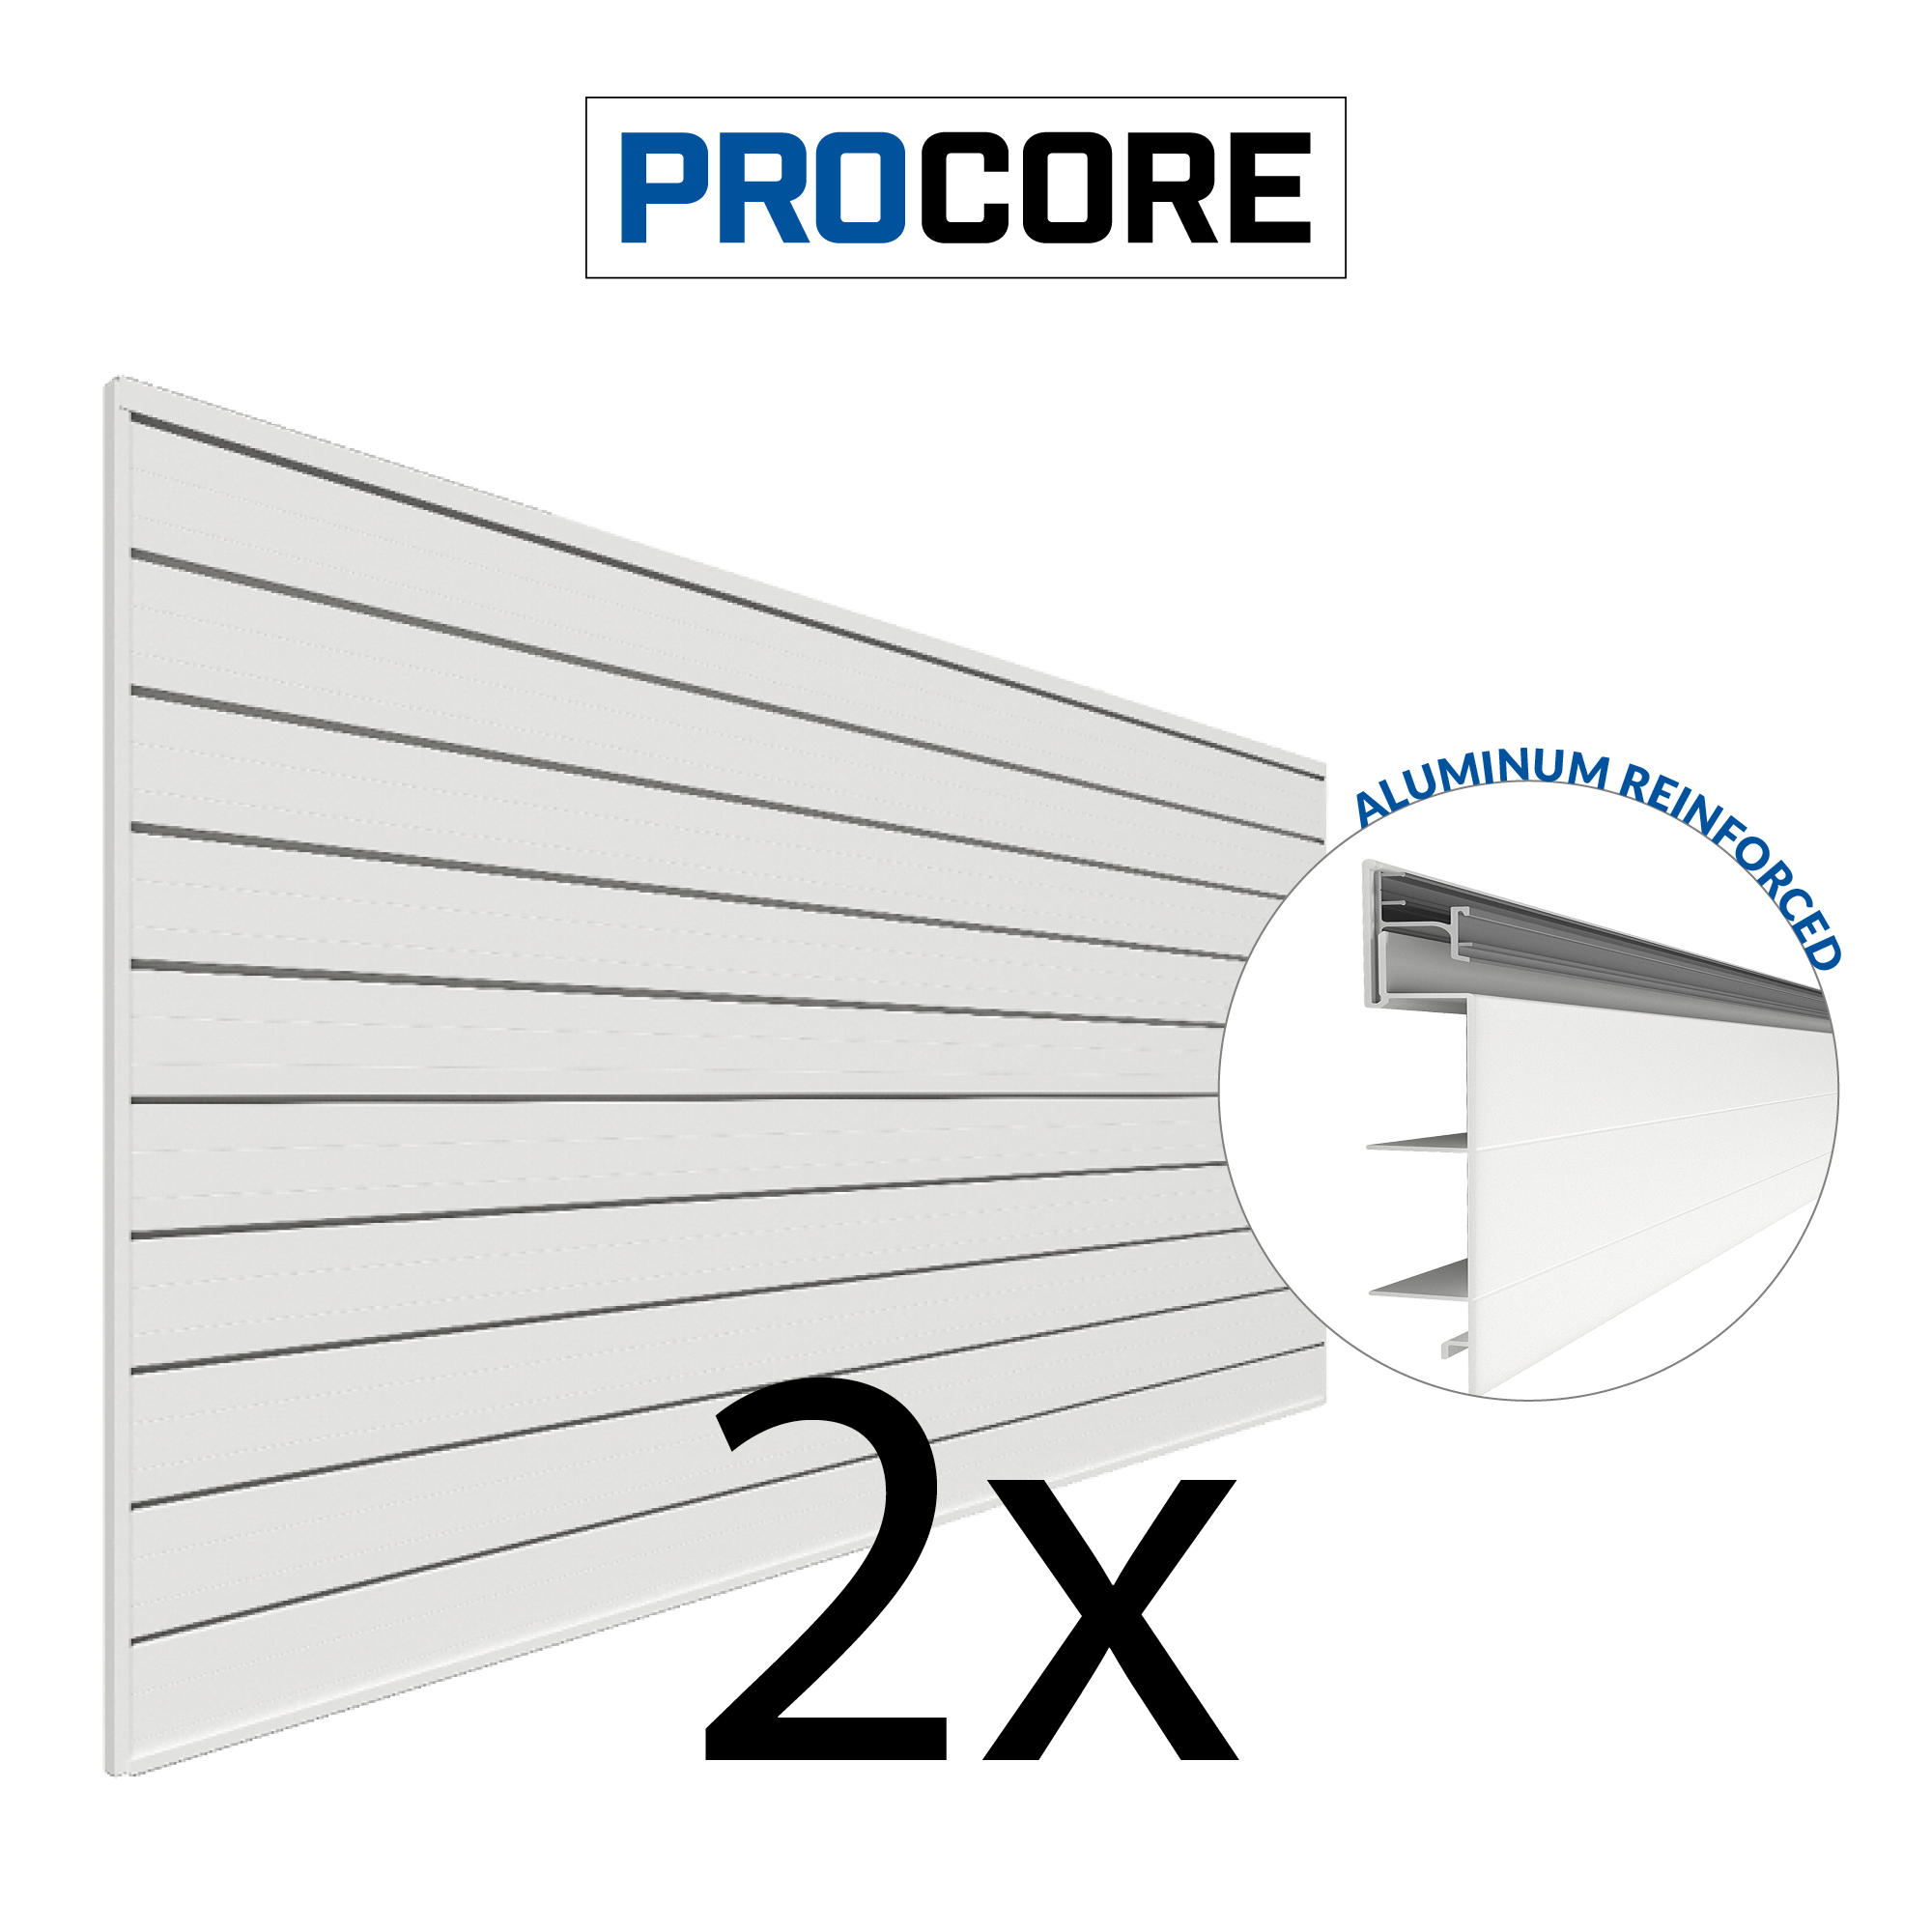 4 x 8ft. PROCORE PVC Slatwall White – 2 Pack 64 sq ft